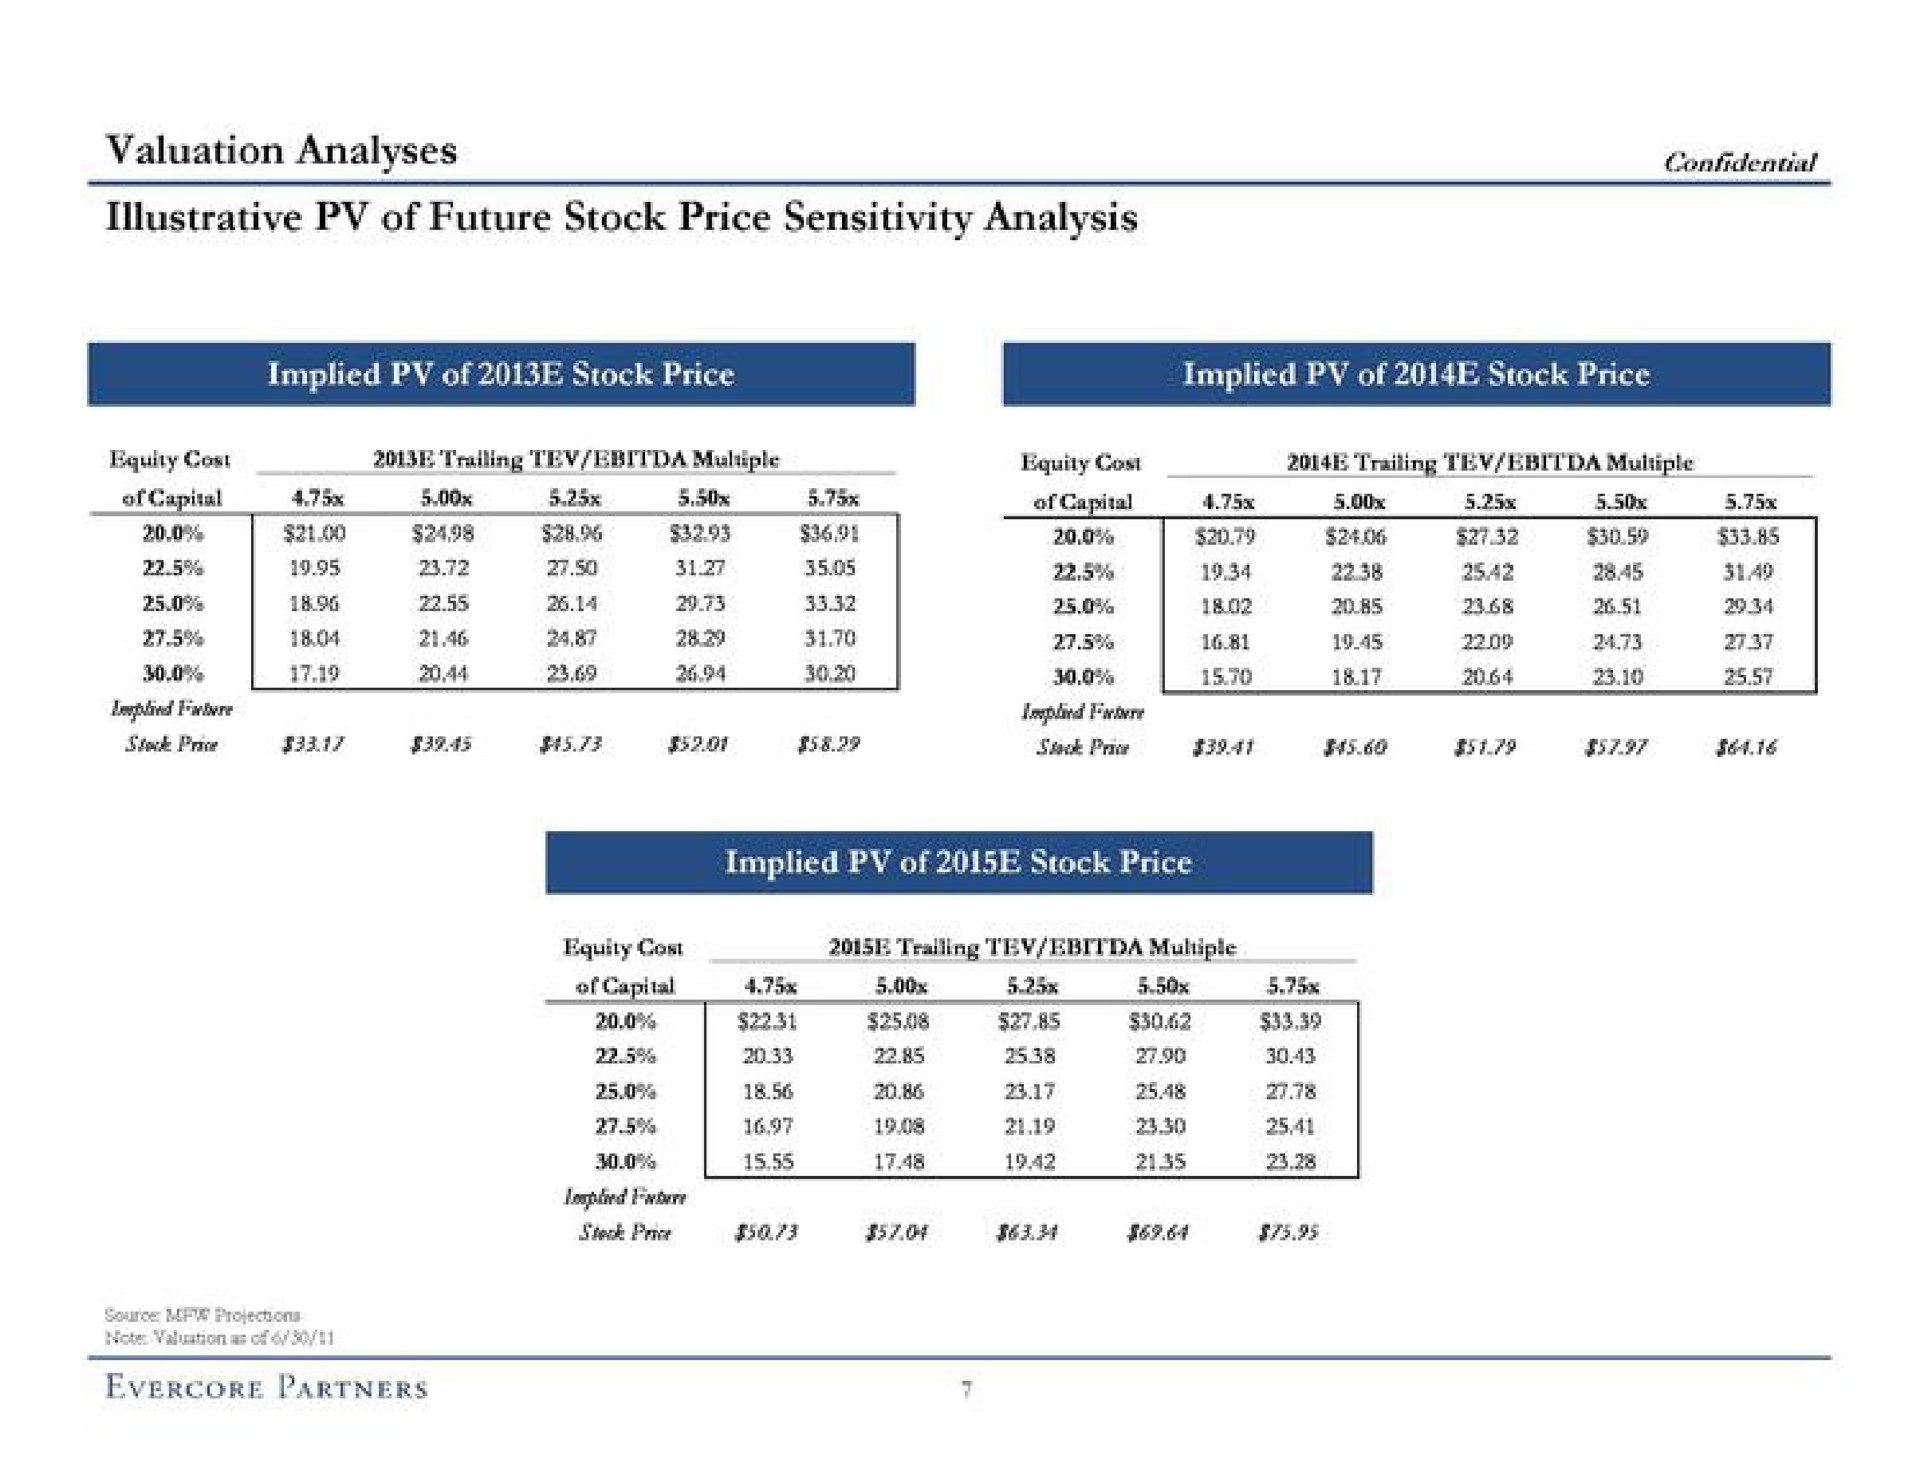 valuation analyses confidential illustrative of future stock price sensitivity analysis | Evercore